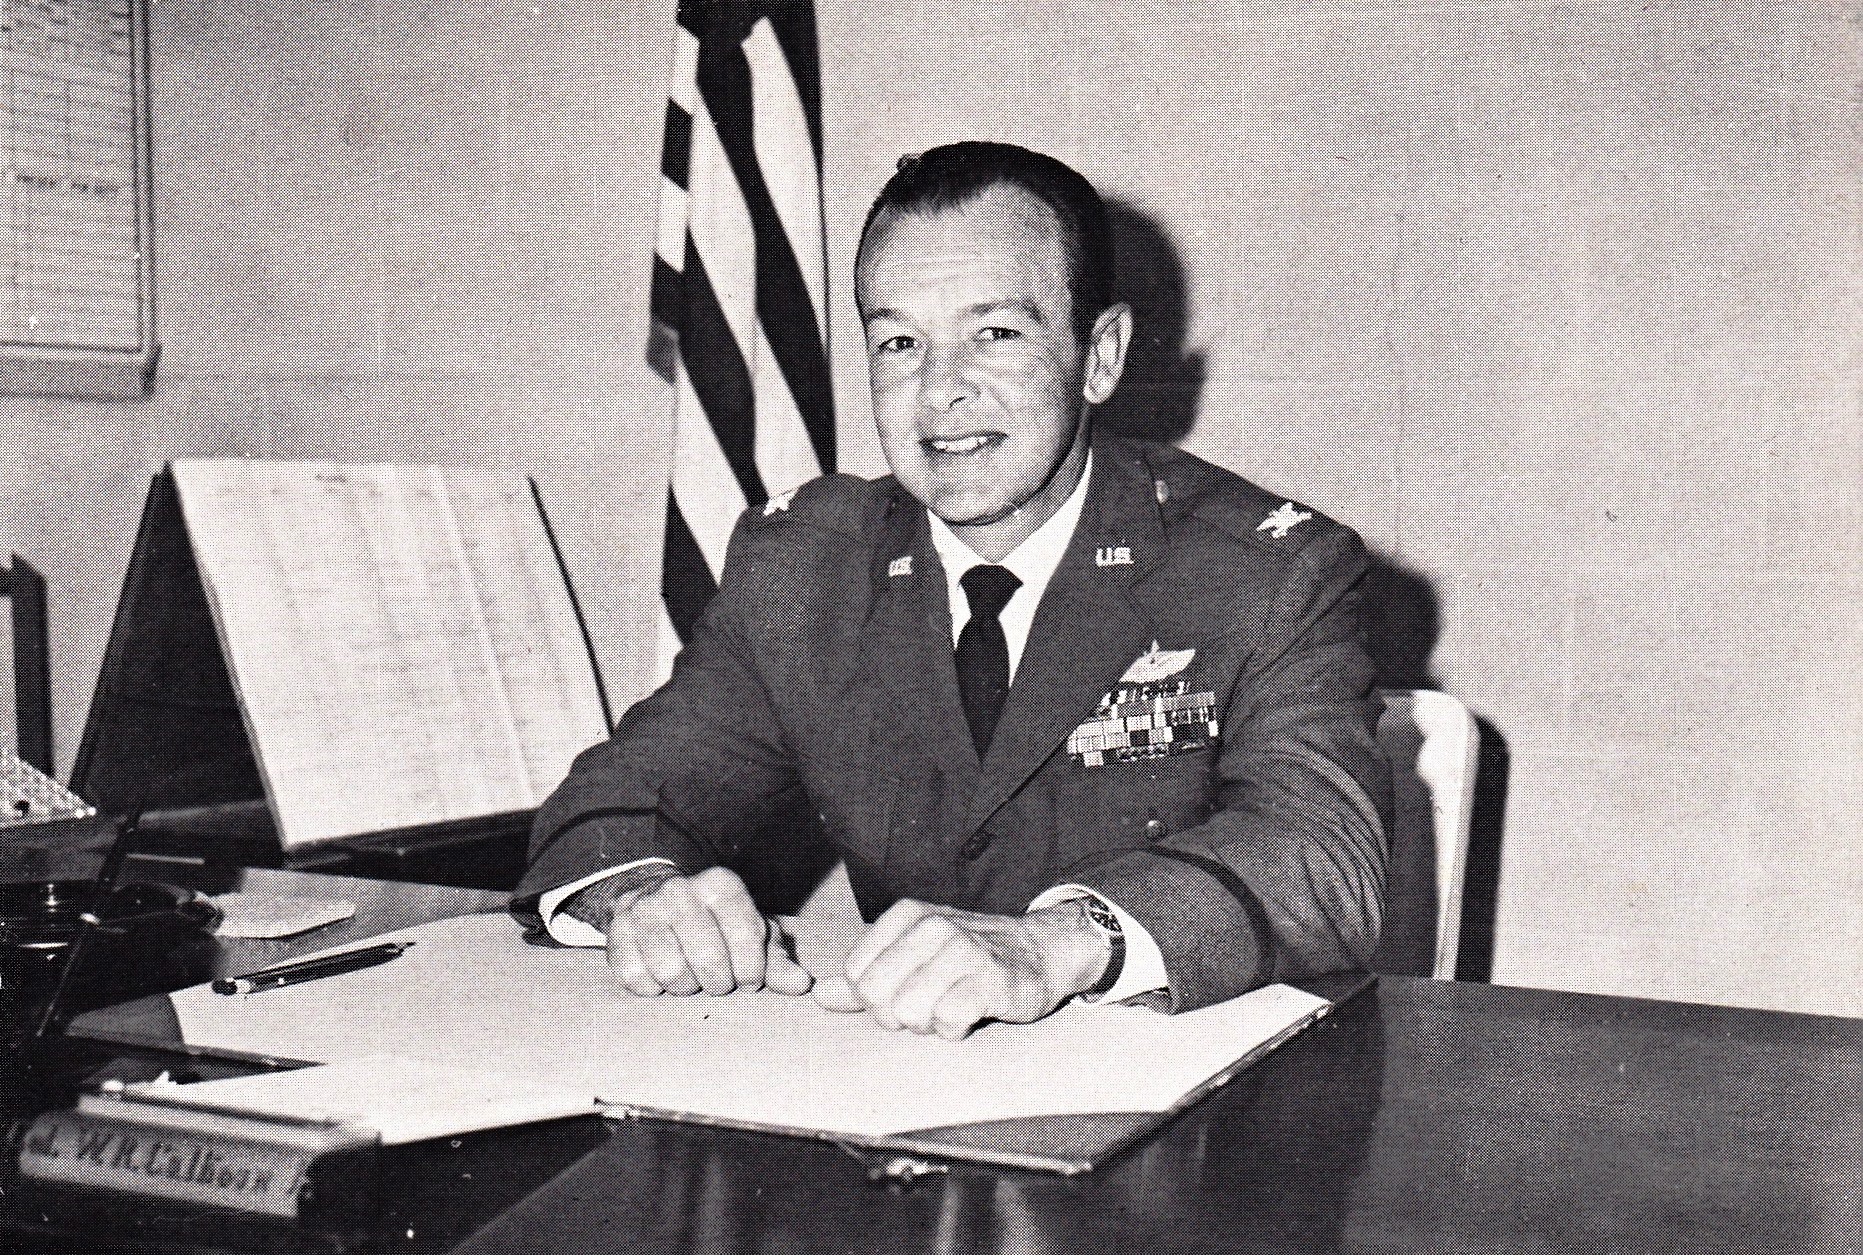 Colonel William R. Calhoun, Jr., U.S. Air Force, commanding the 461st Bombardment Wing, circa 1963. (U.S. Air Force)